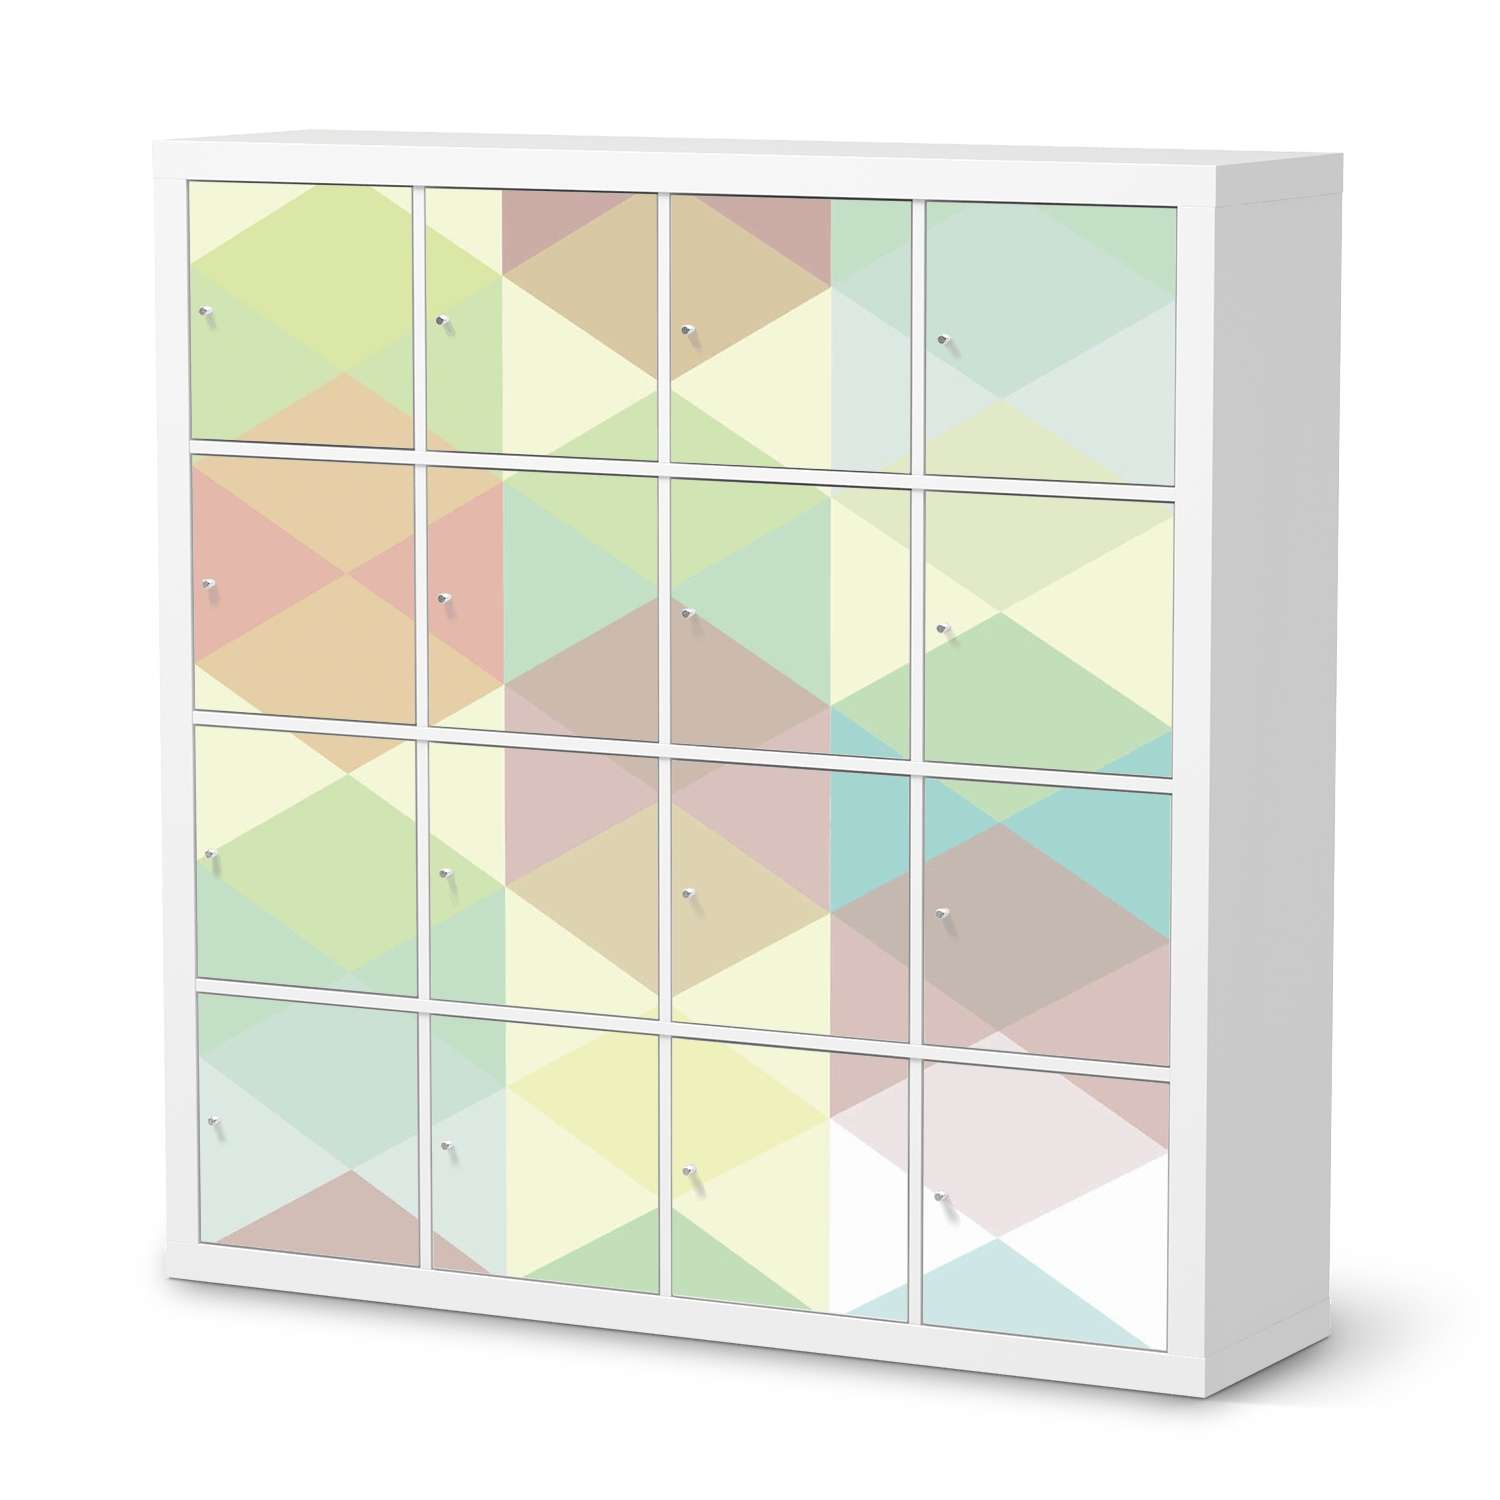 Selbstklebende Folie IKEA Expedit Regal 16 T?ren - Design: Melitta Pastell Geometrie von creatisto